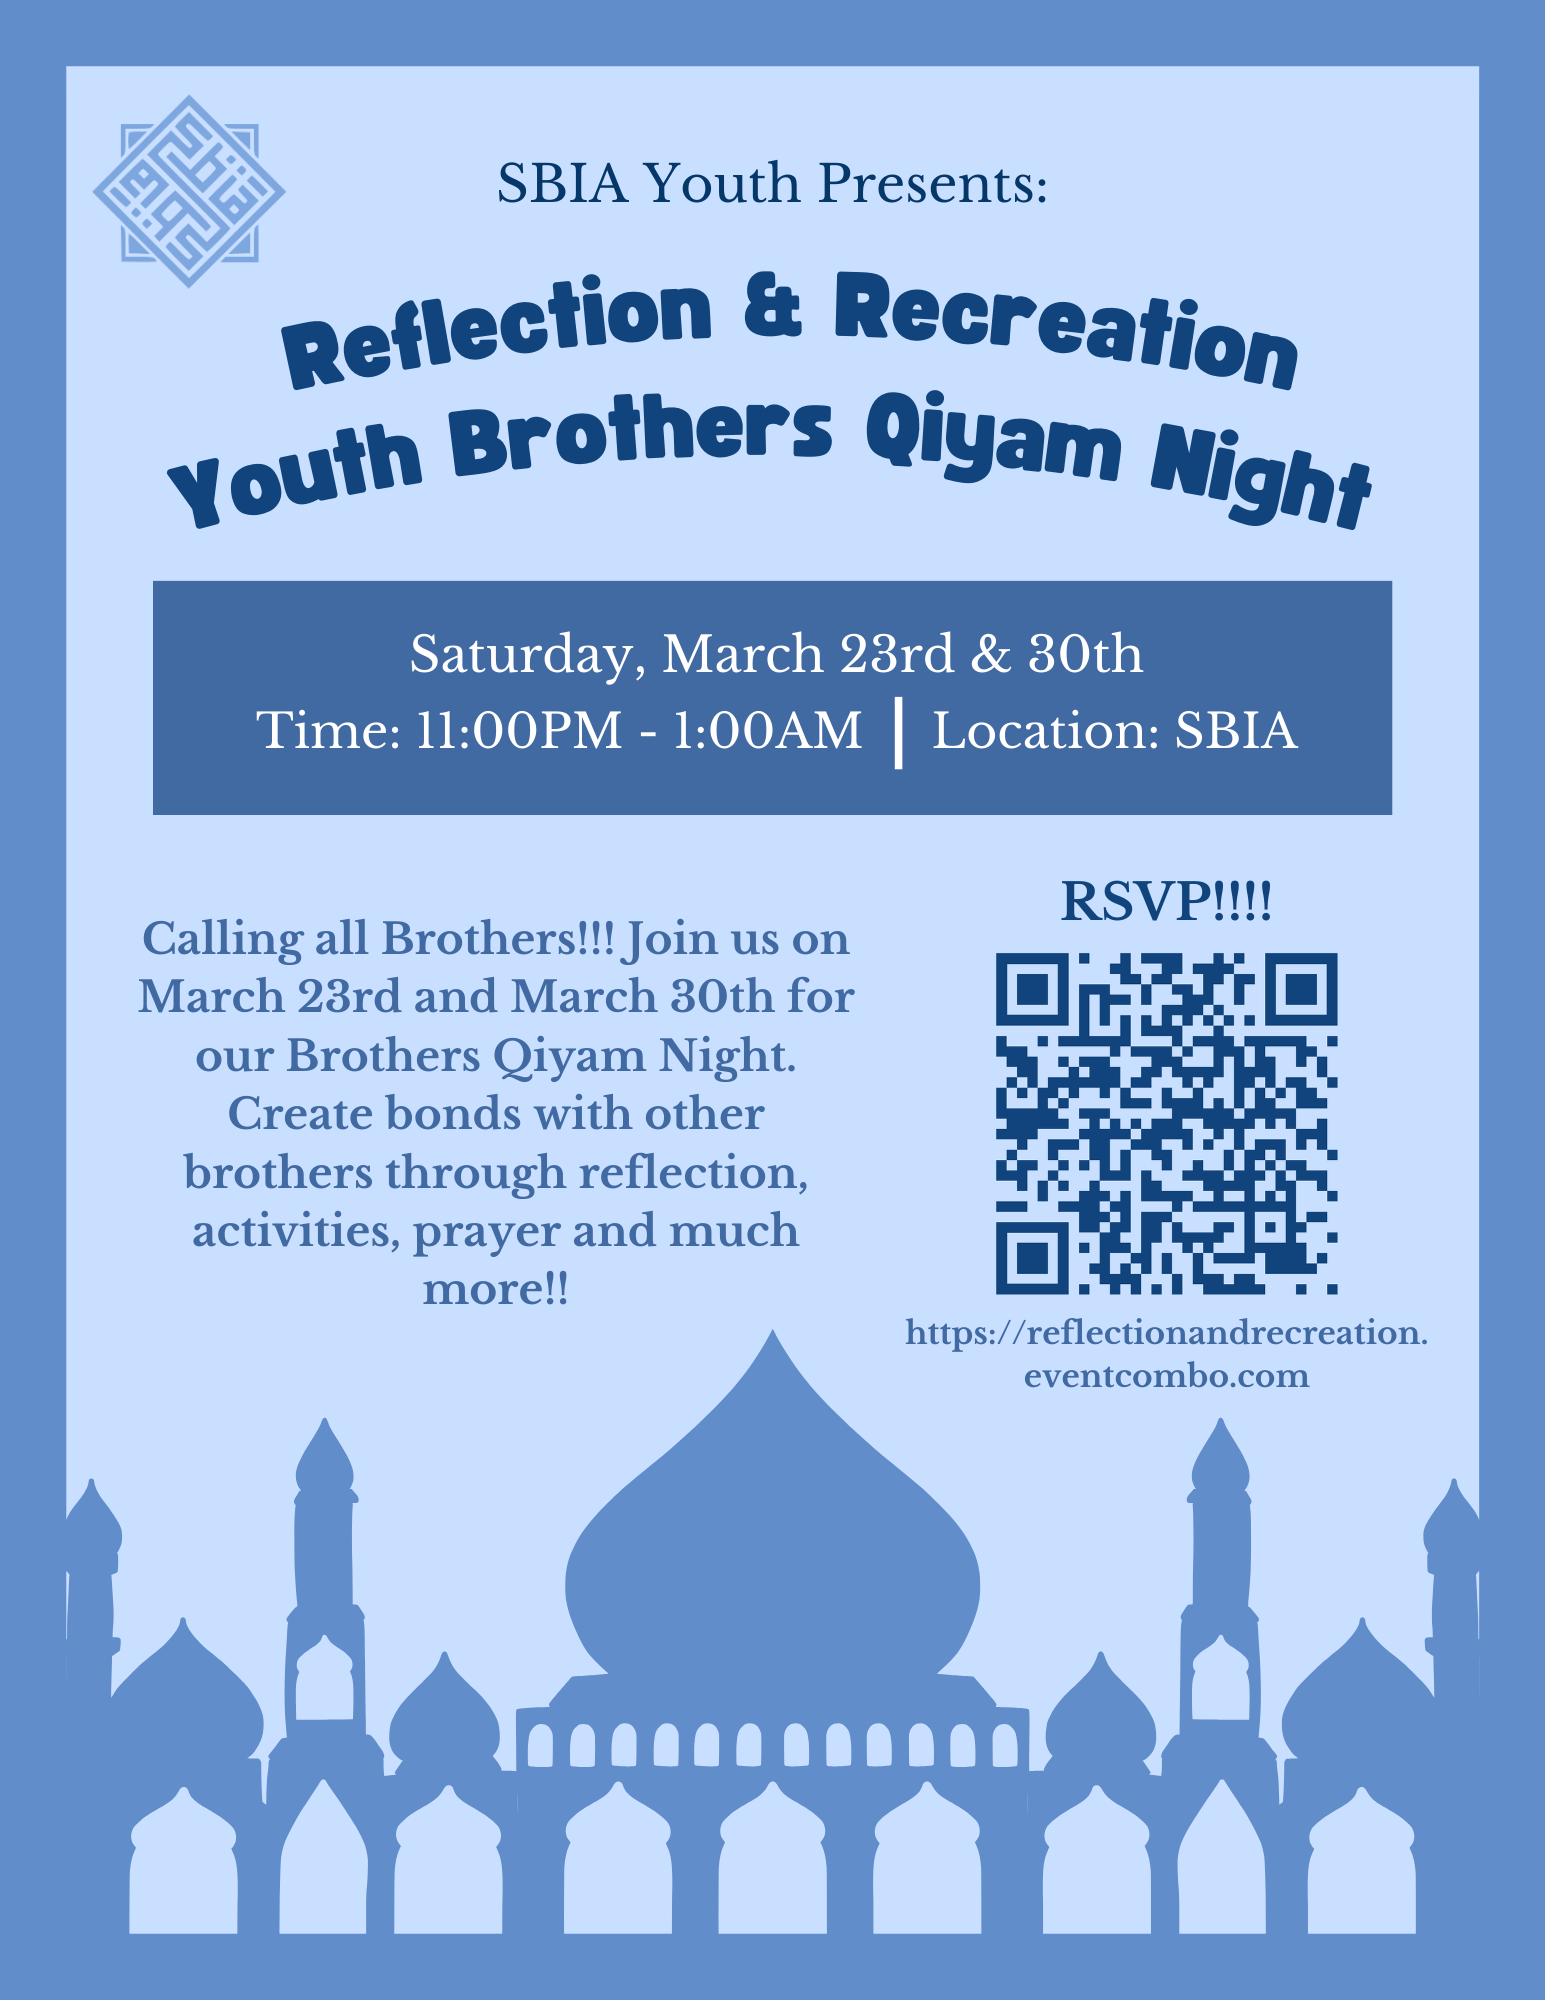 Reflection & Recreation: Youth Brothers Qiyam Night